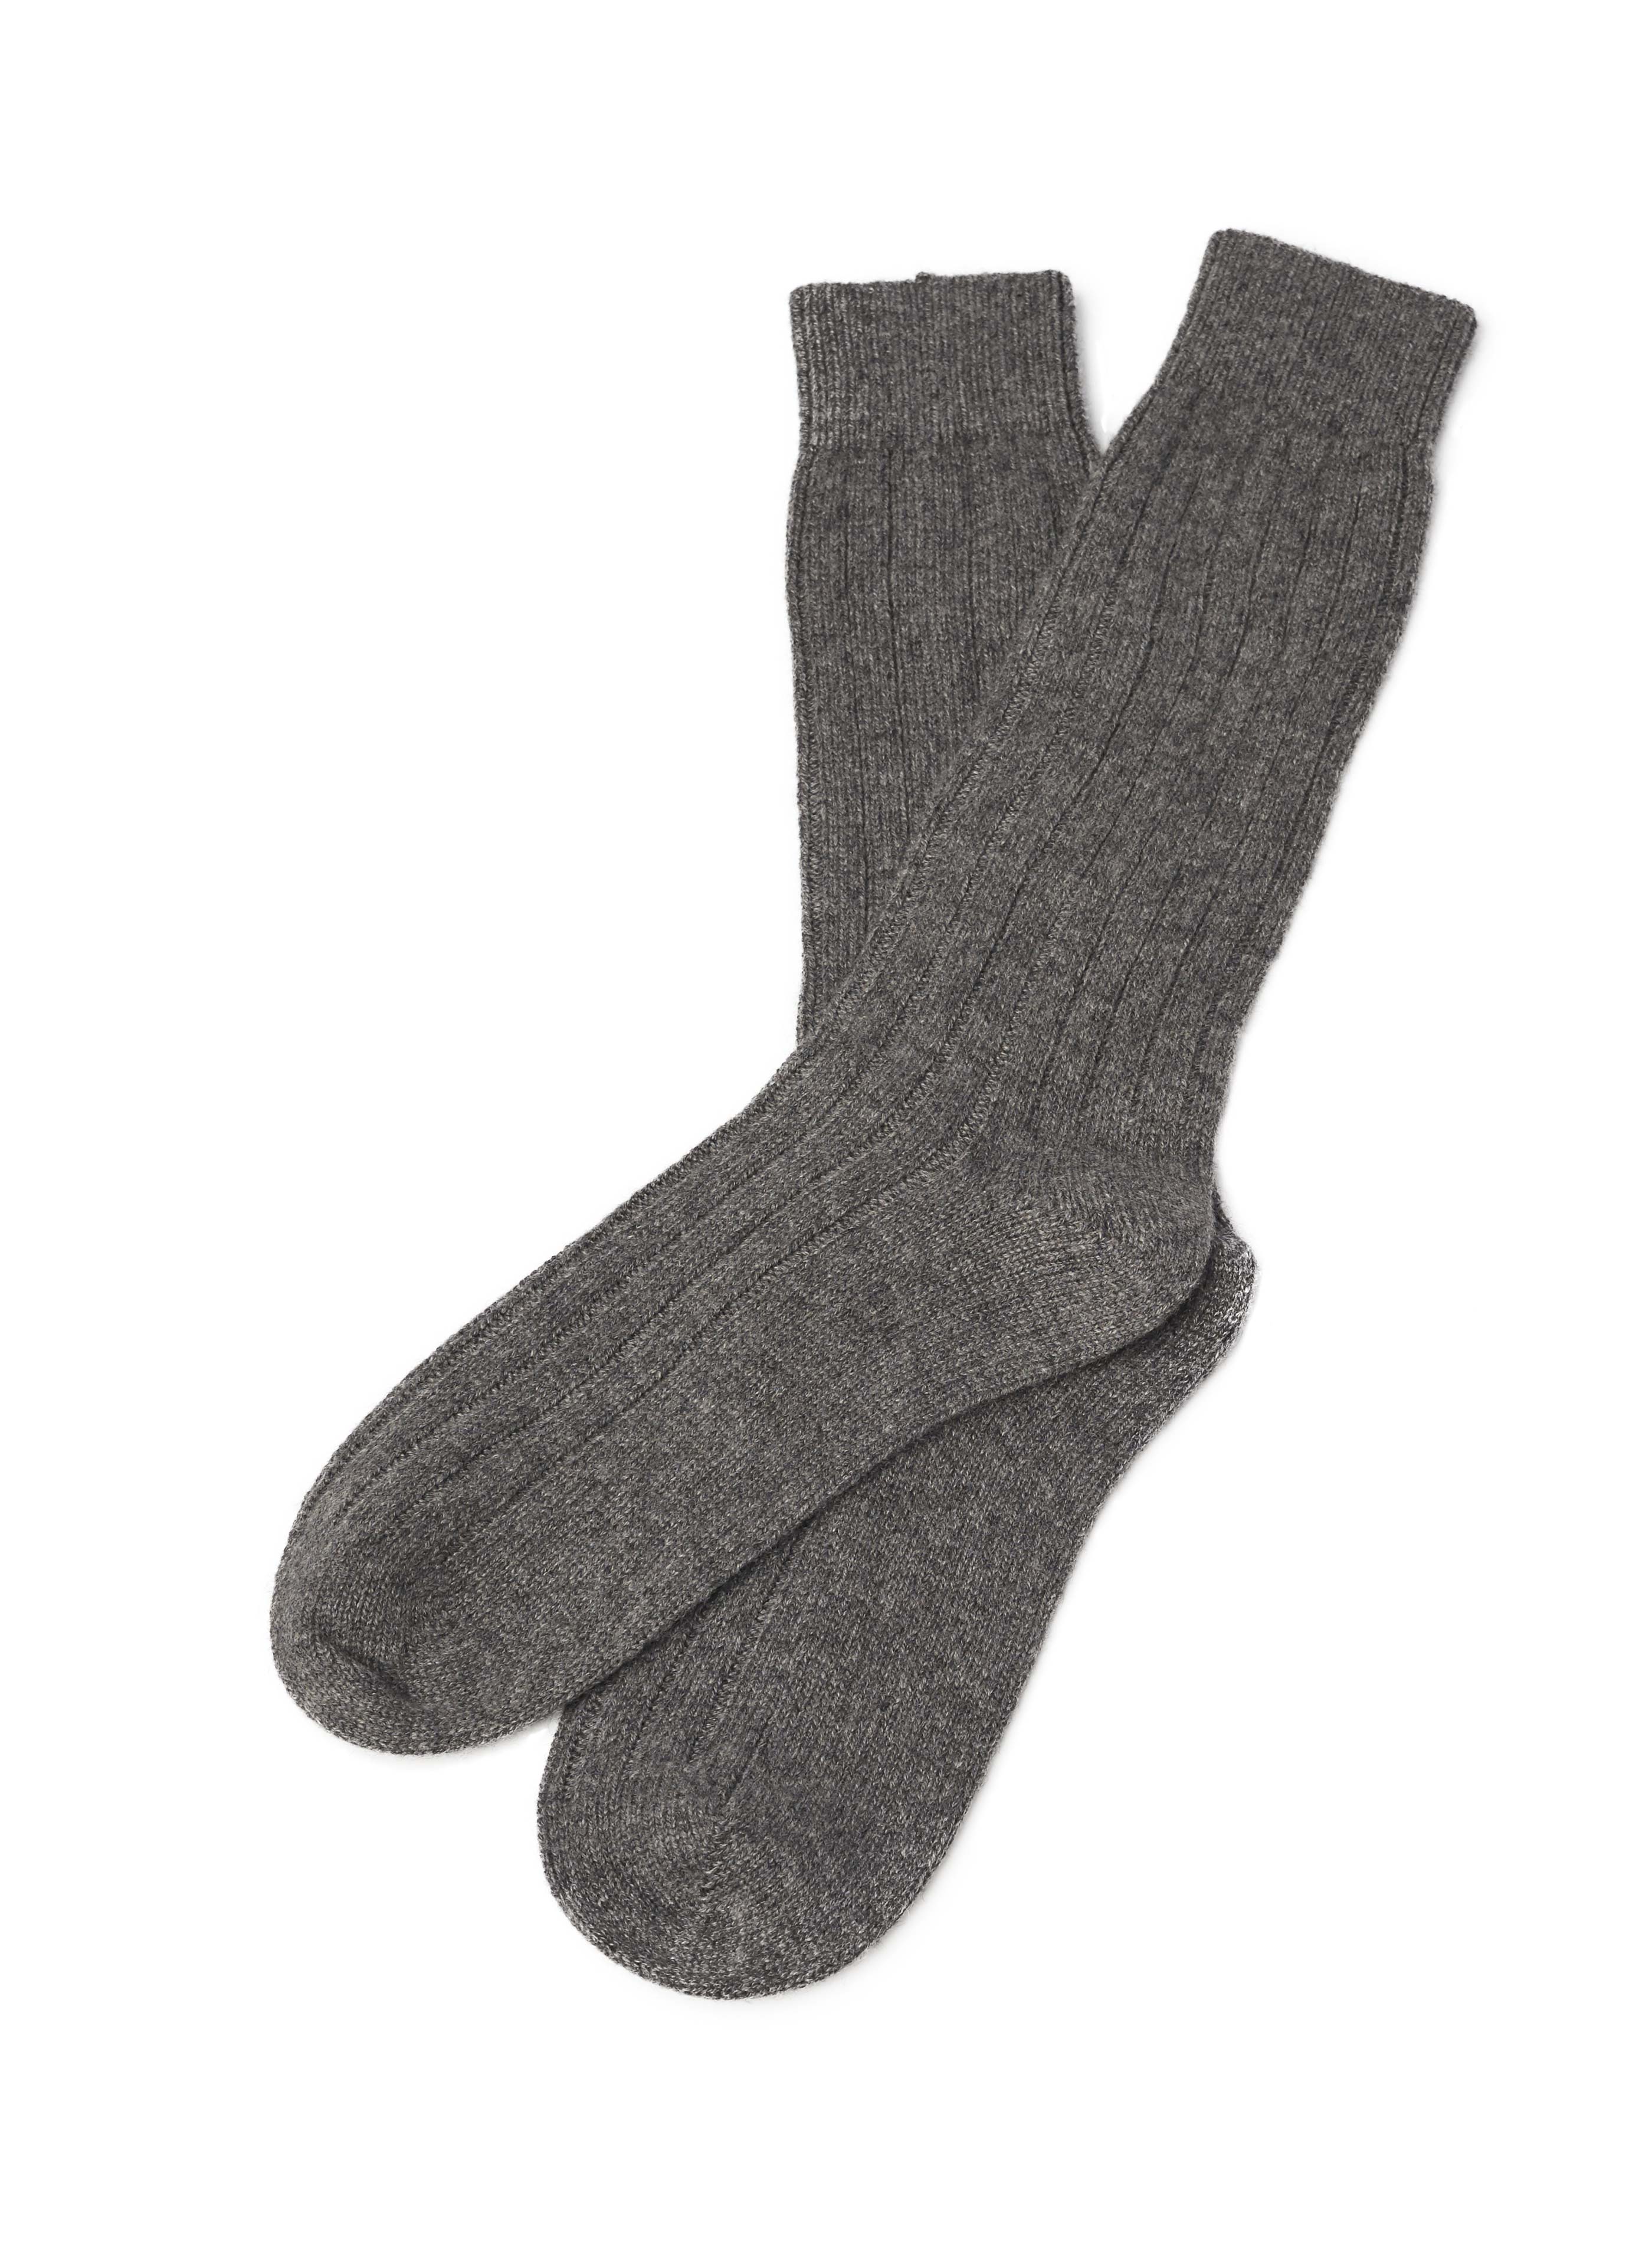 Pure Cashmere Socks (Charcoal, Small/Medium)